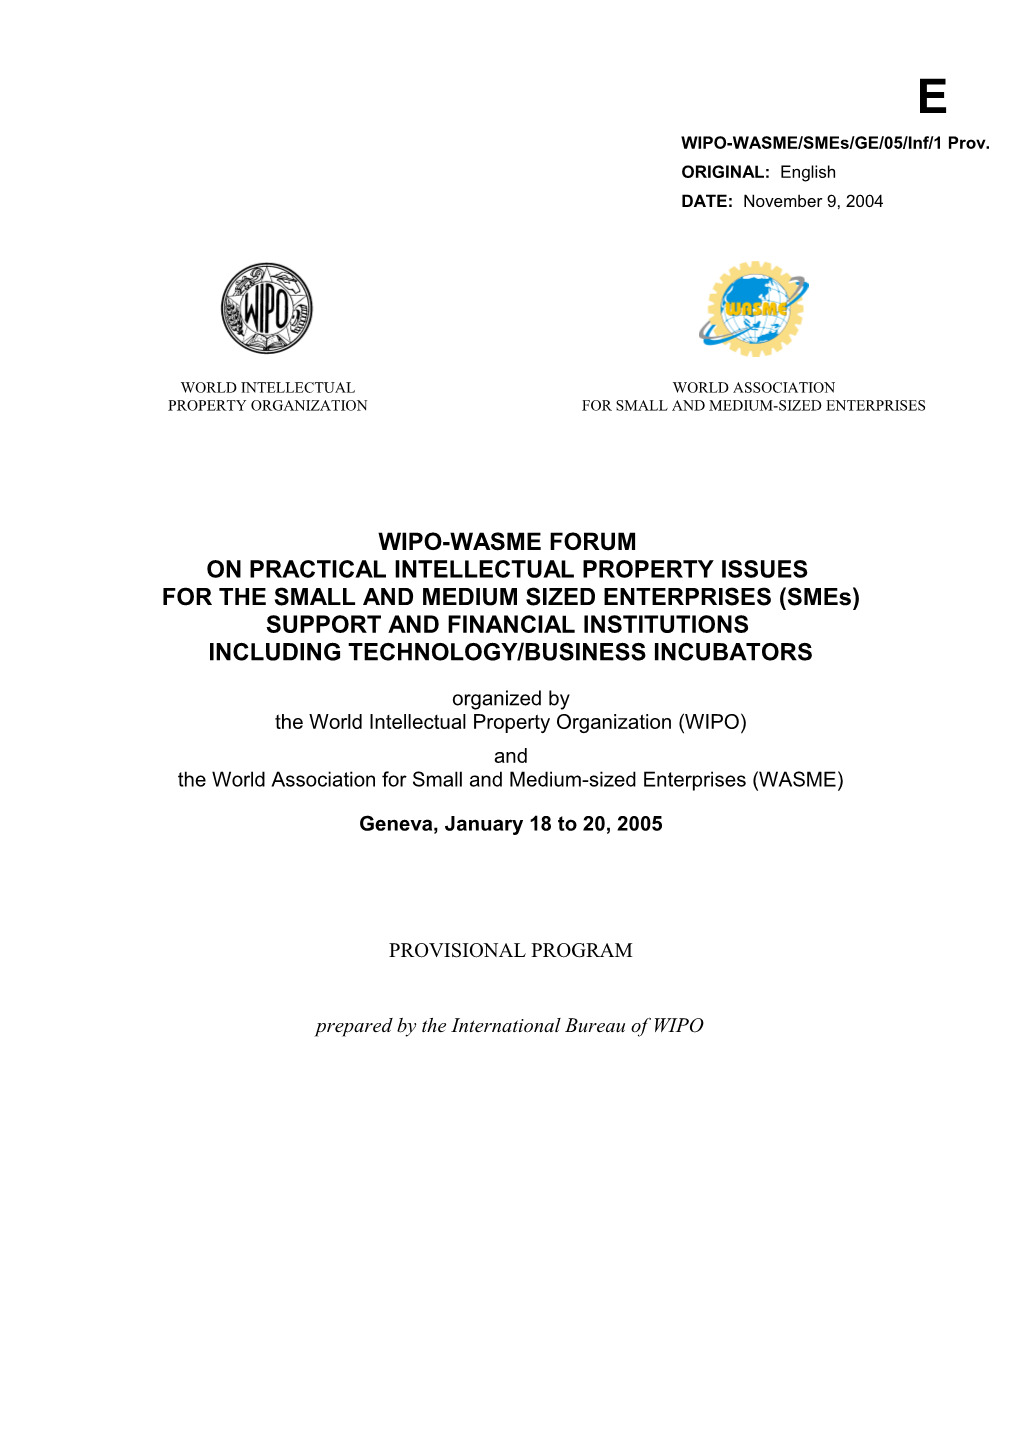 WIPO-WASME/SMES/GE/05/INF/1 PROV.: Provisional Program